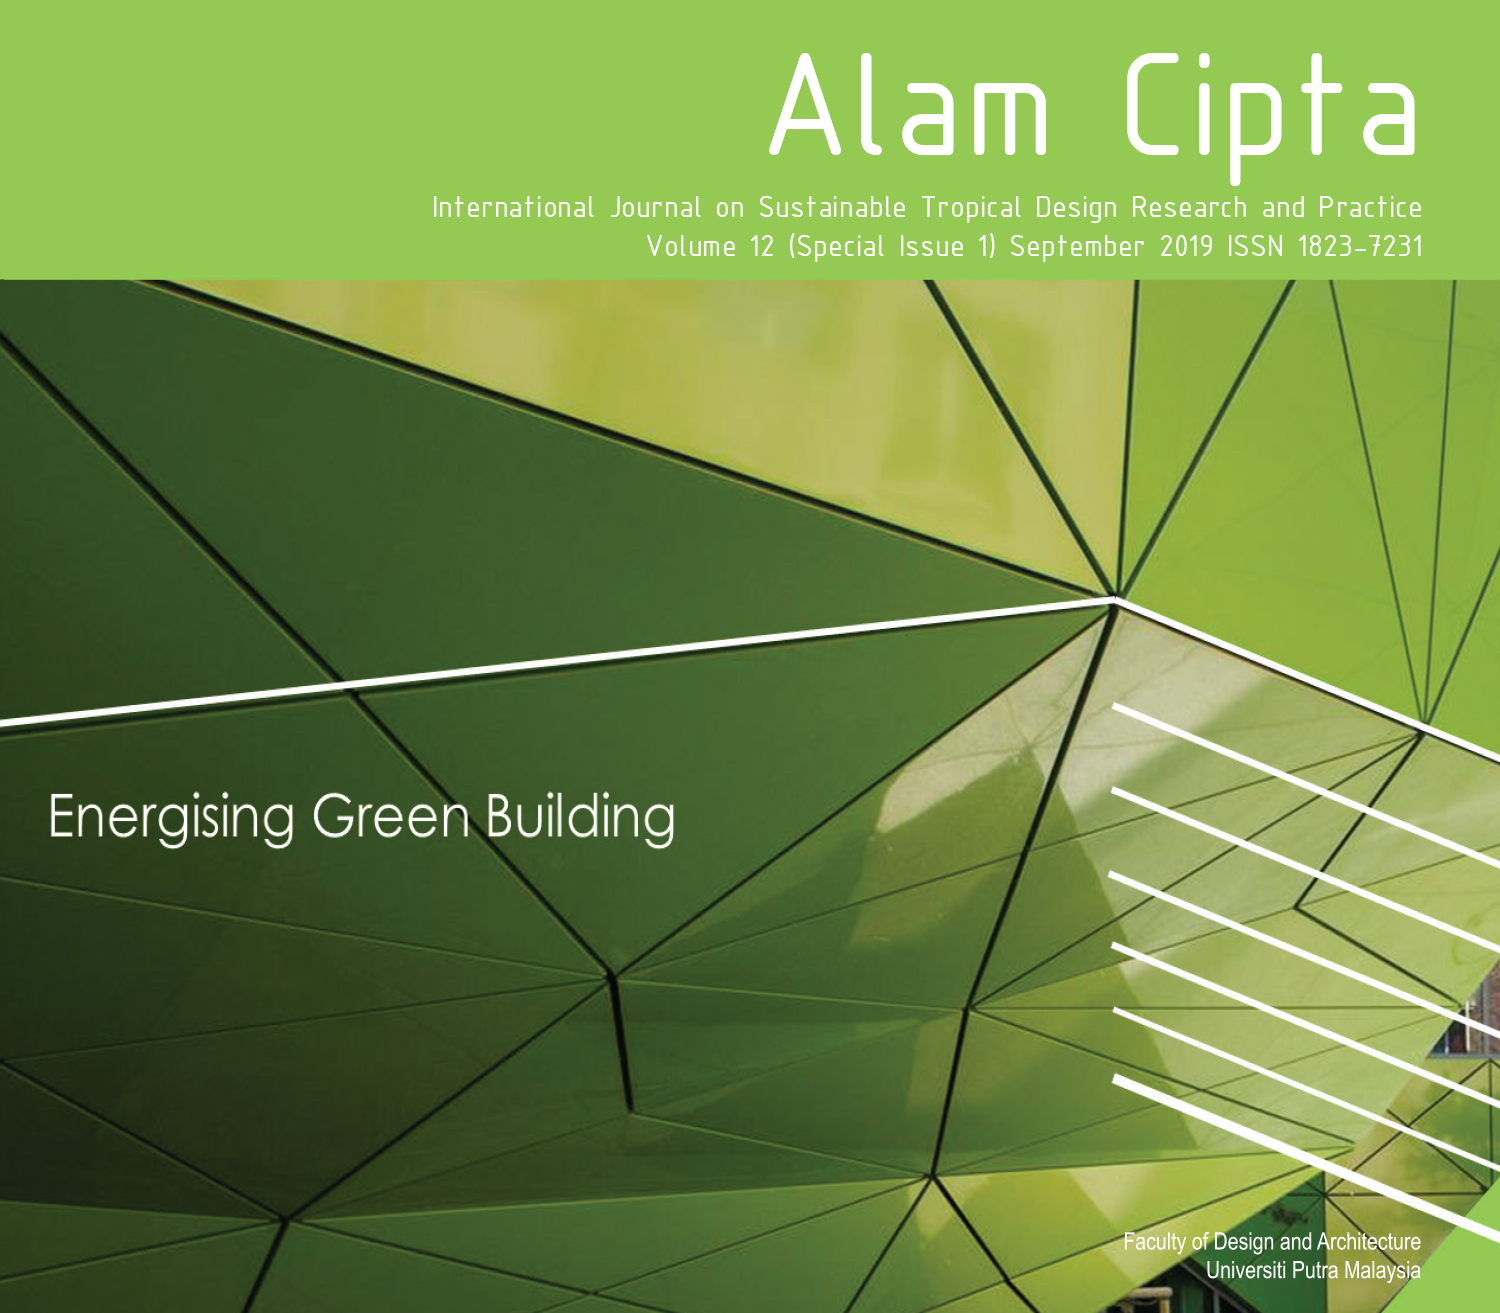 ALAM CIPTA  Vol 12 (Special Issue 1) Sept 2019: Energising Green Building  